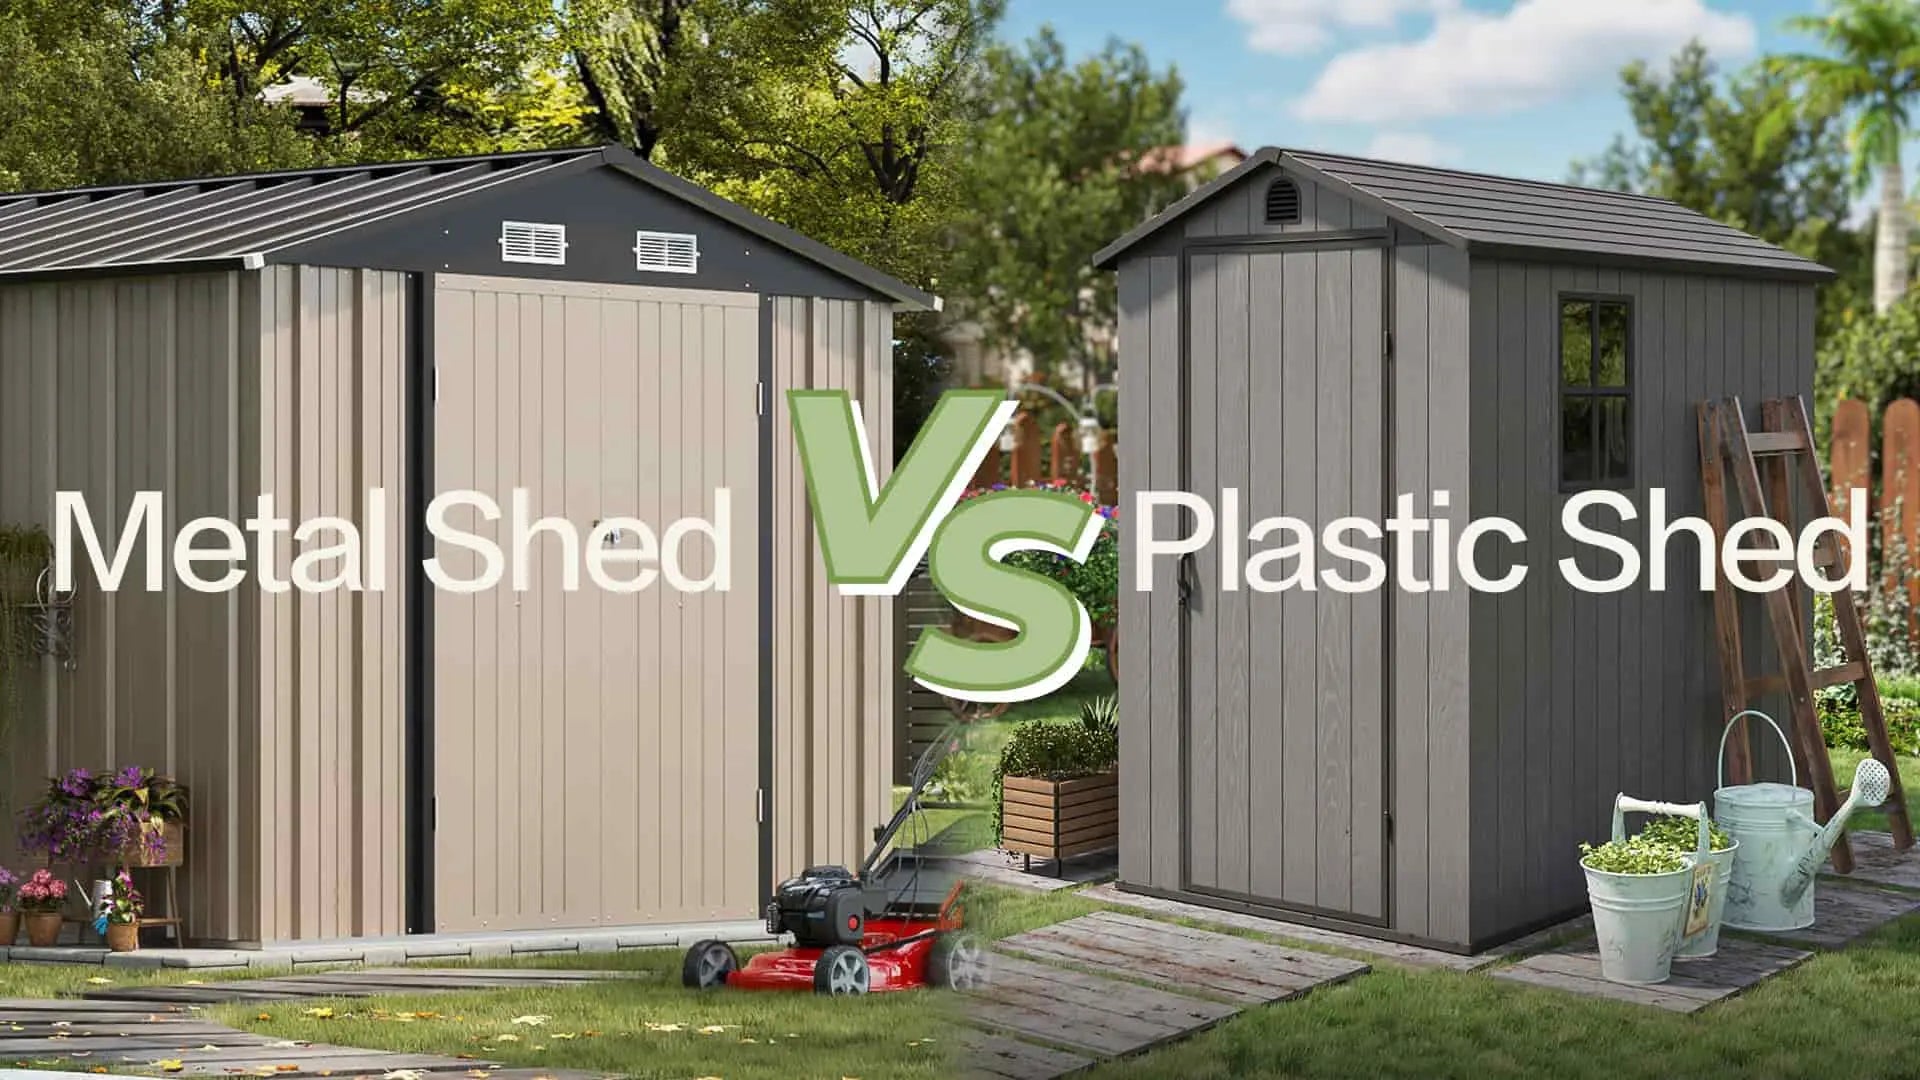 Metal shed vs Plastic shed